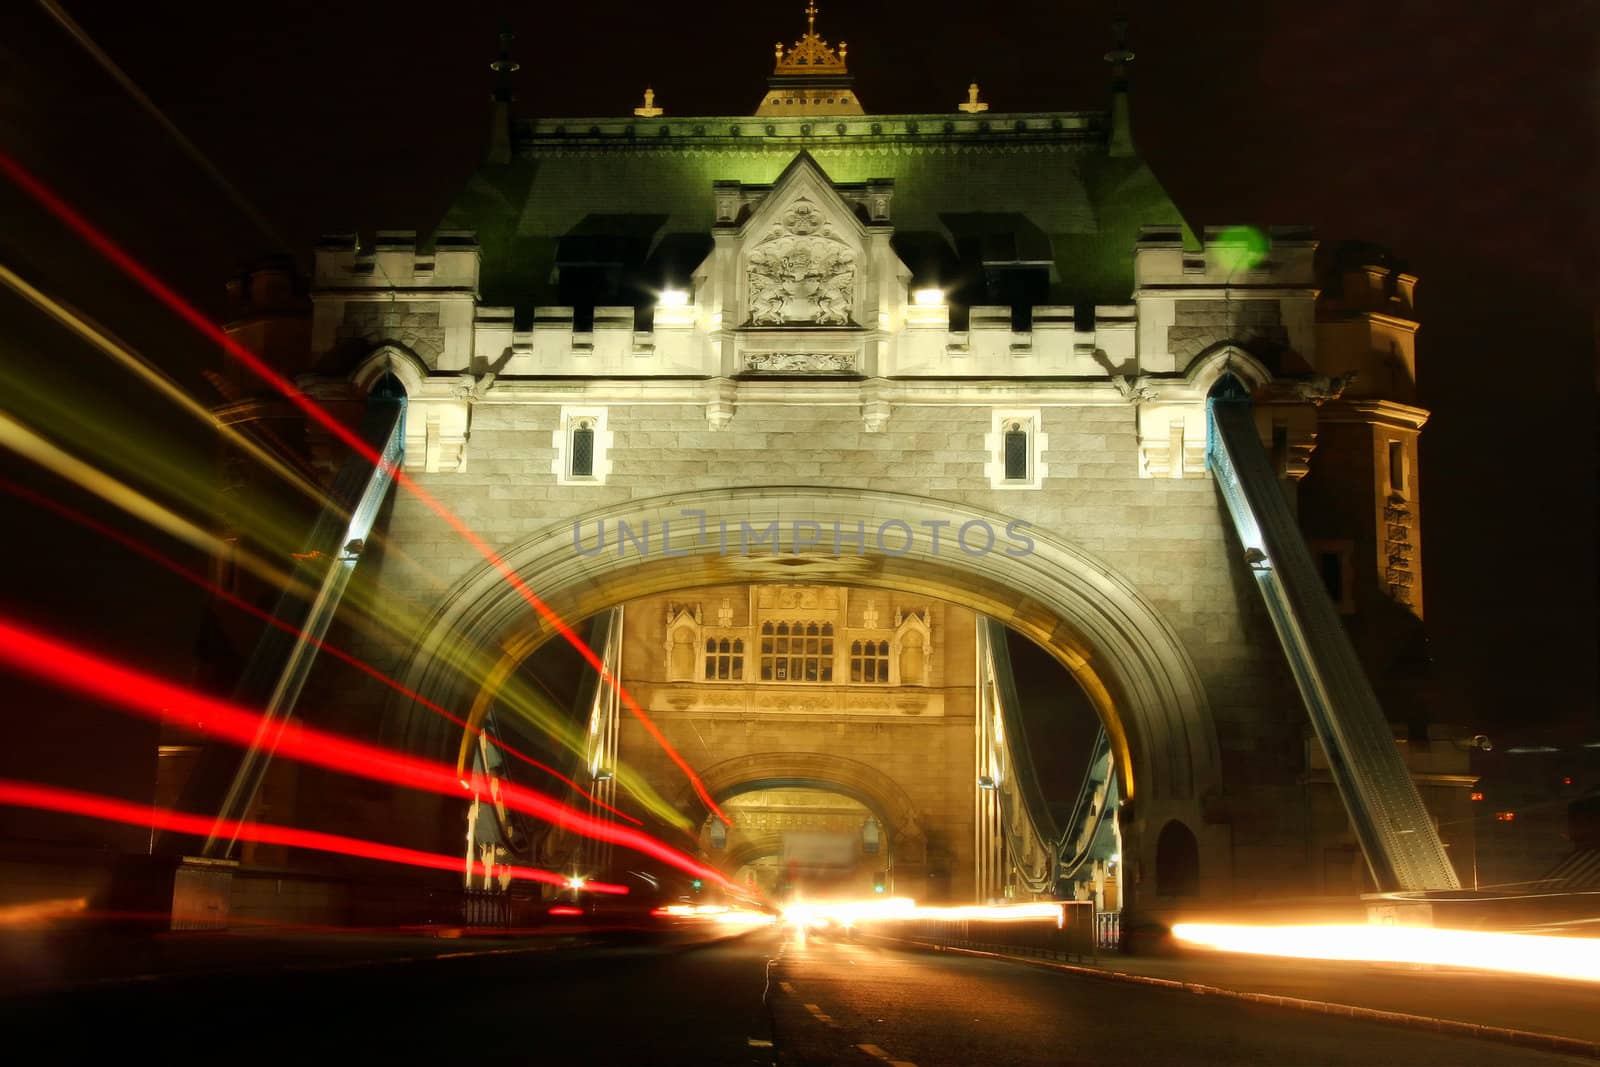 Tower Bridge by Imagecom